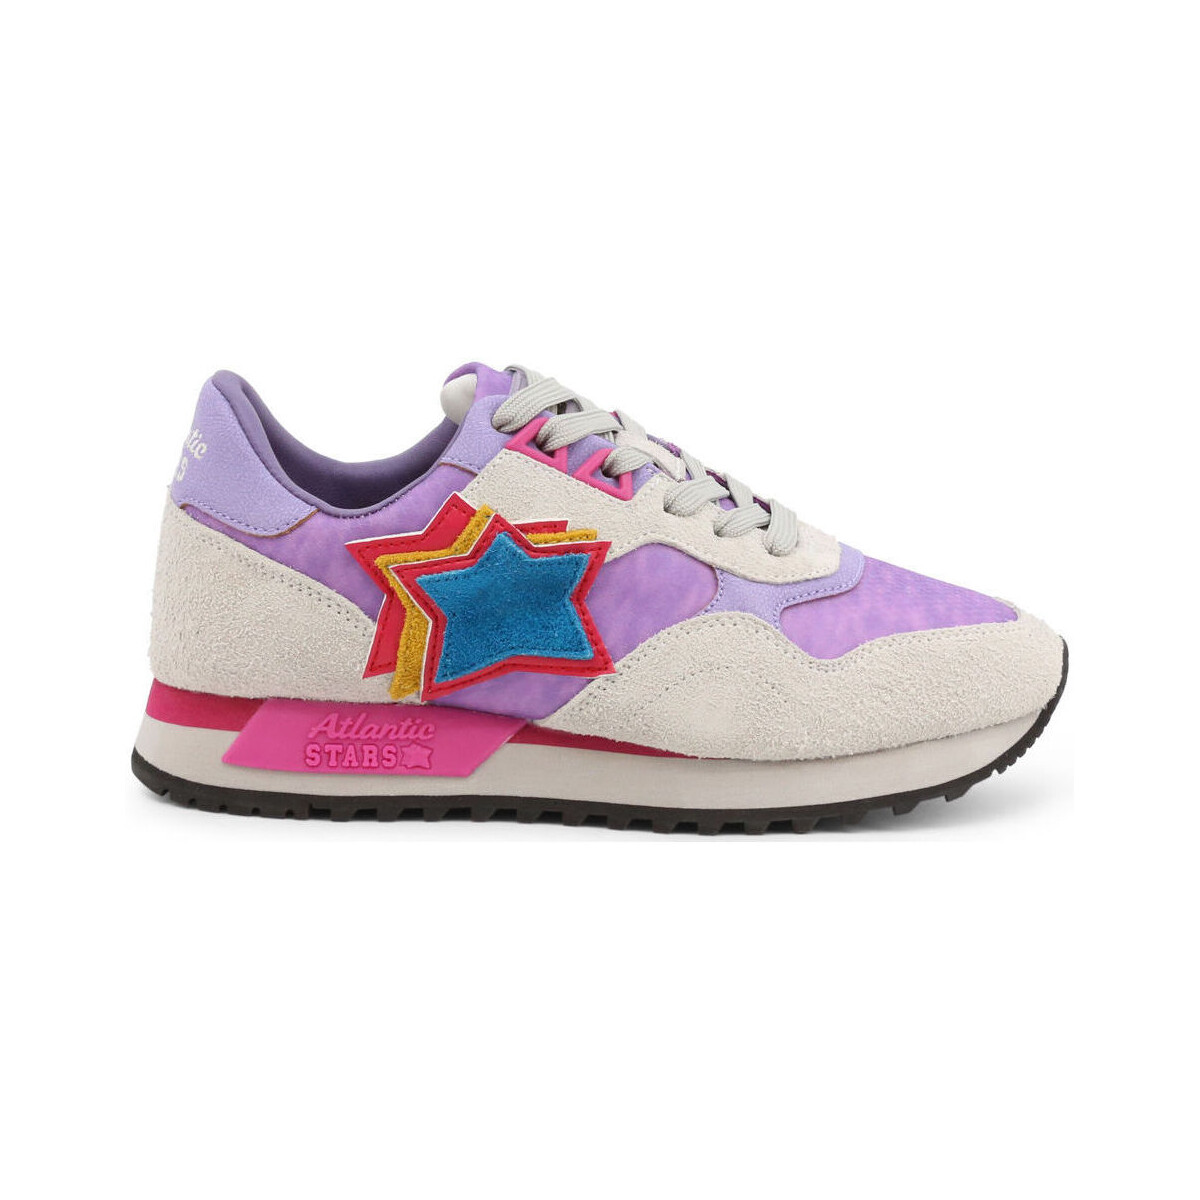 Pantofi Femei Sneakers Atlantic Stars ghalac-ylbl-dr23 violet violet